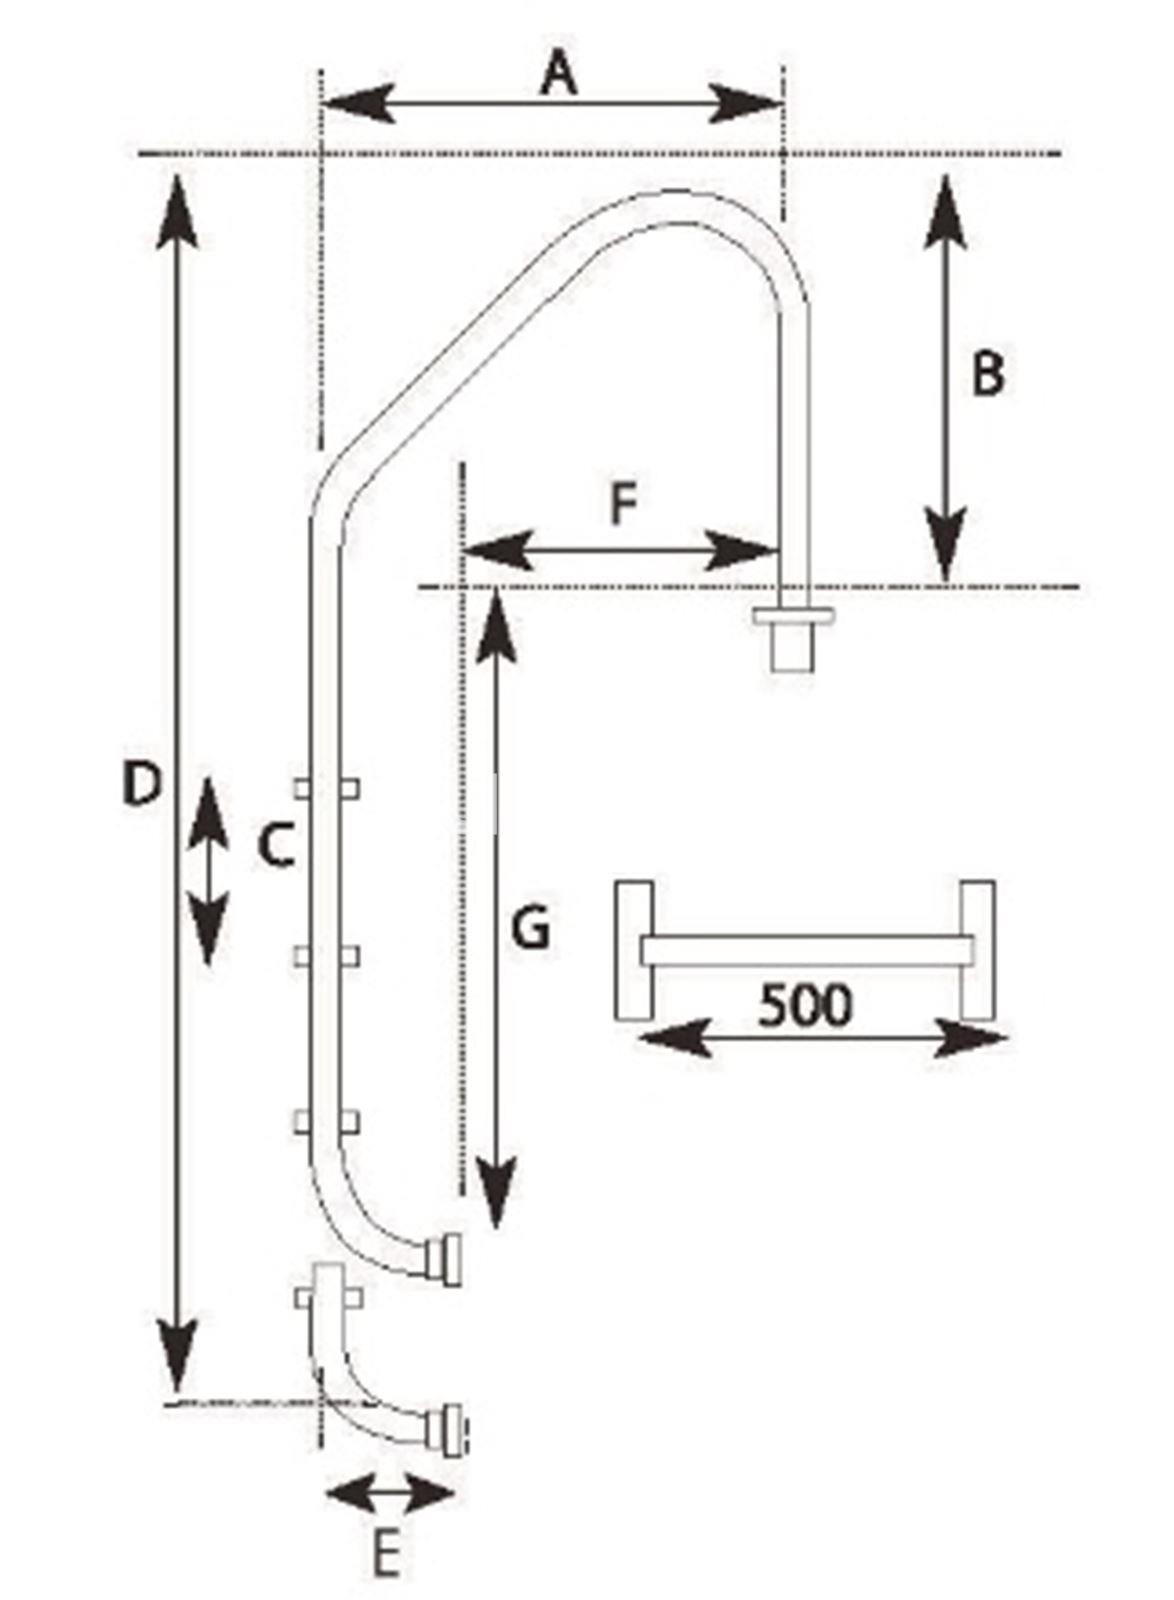 Escalera standar de acero inox AISI-316 - Imagen 3